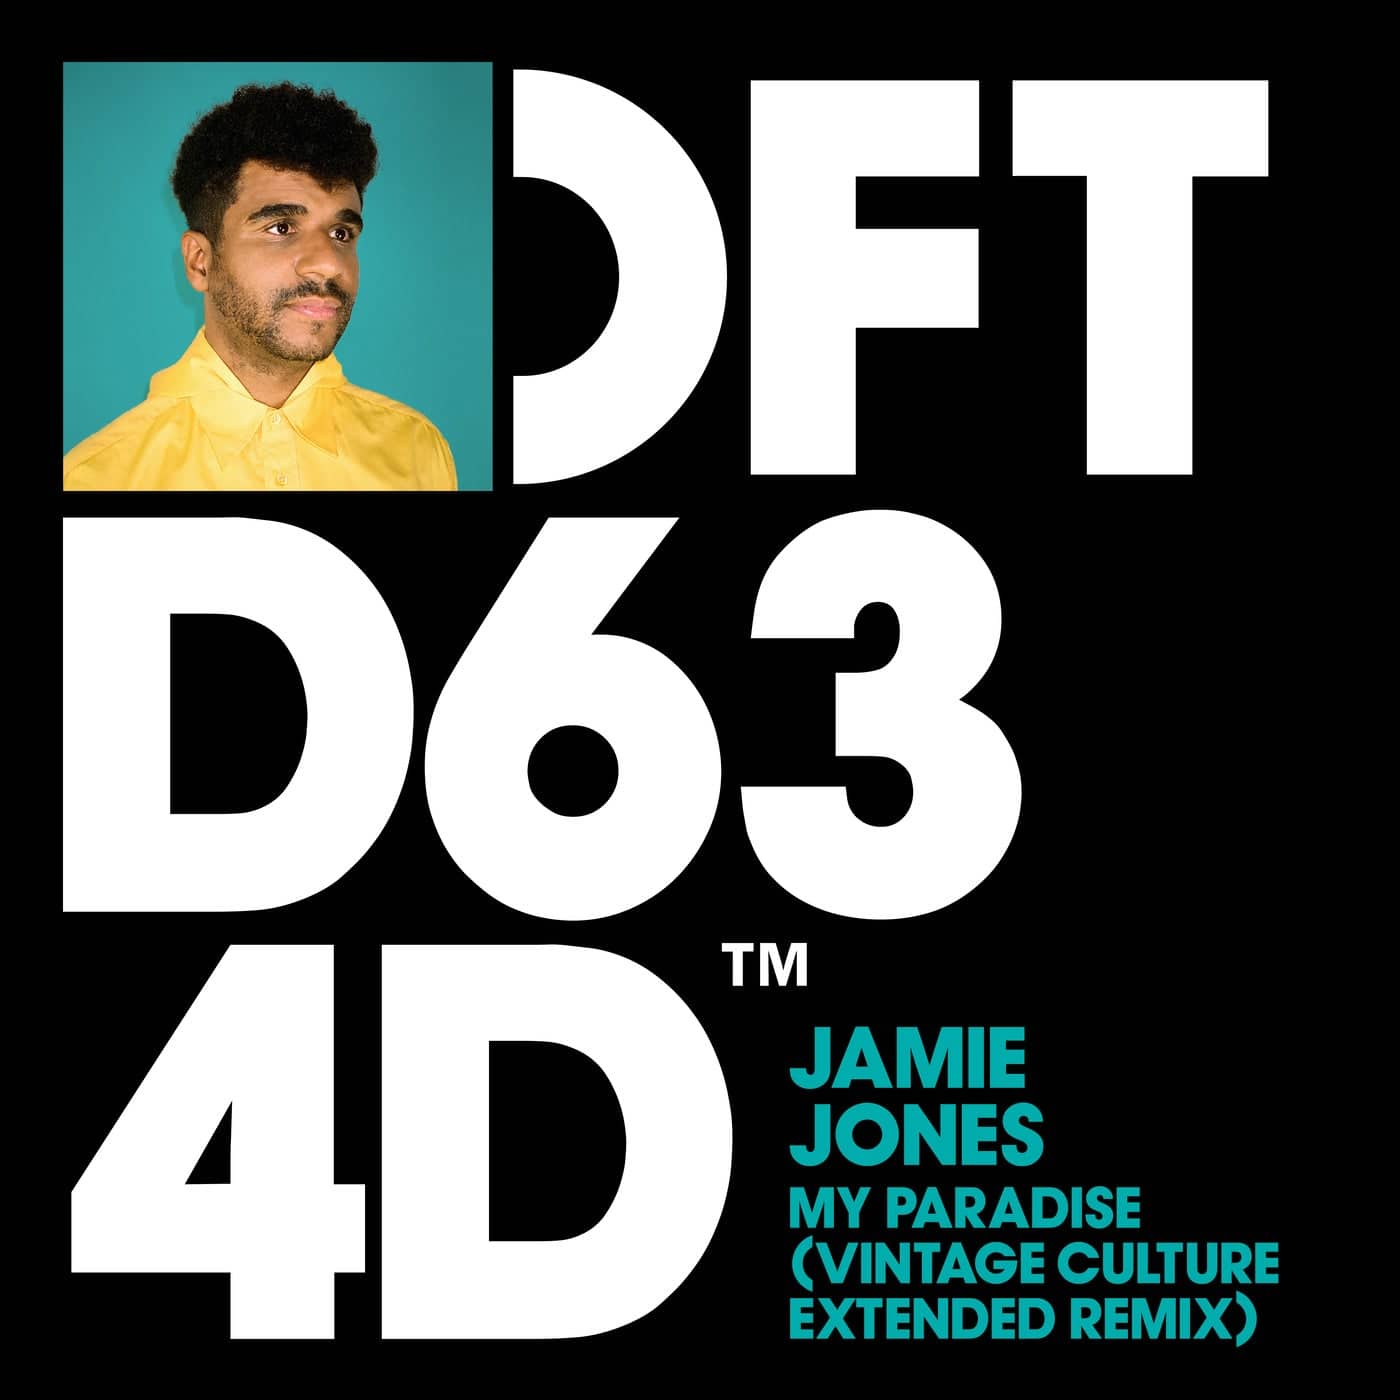 Download Jamie Jones - My Paradise - Vintage Culture Extended Remix on Electrobuzz